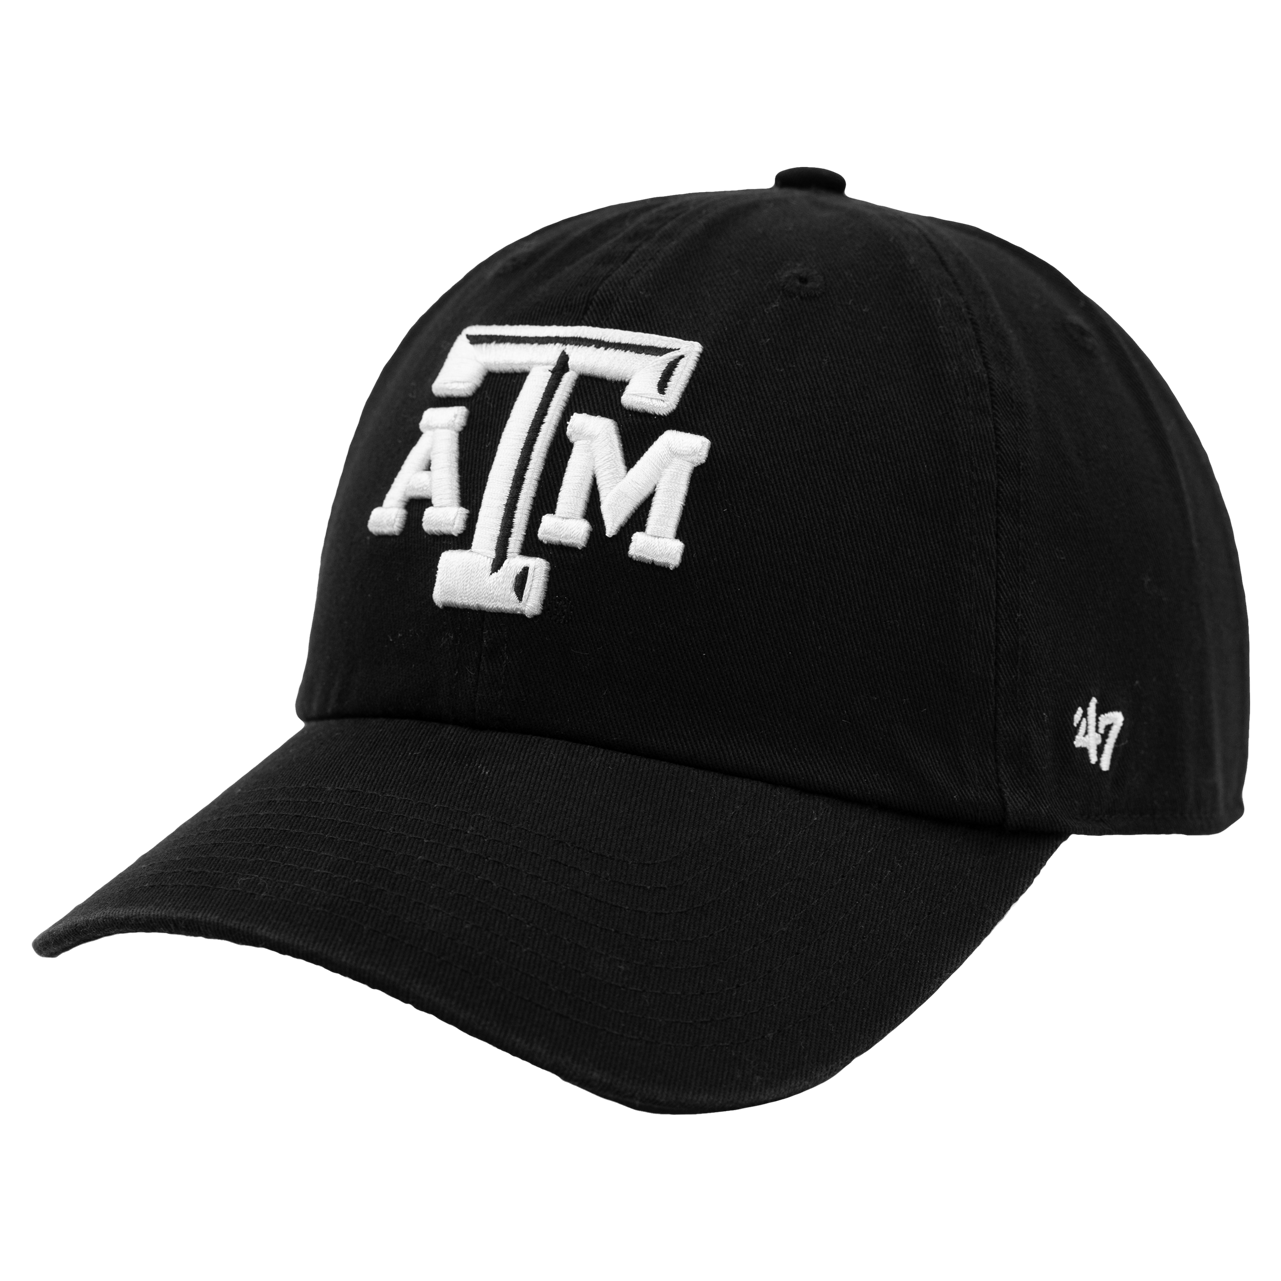 Texas A&M Black Beveled Clean Up Cap